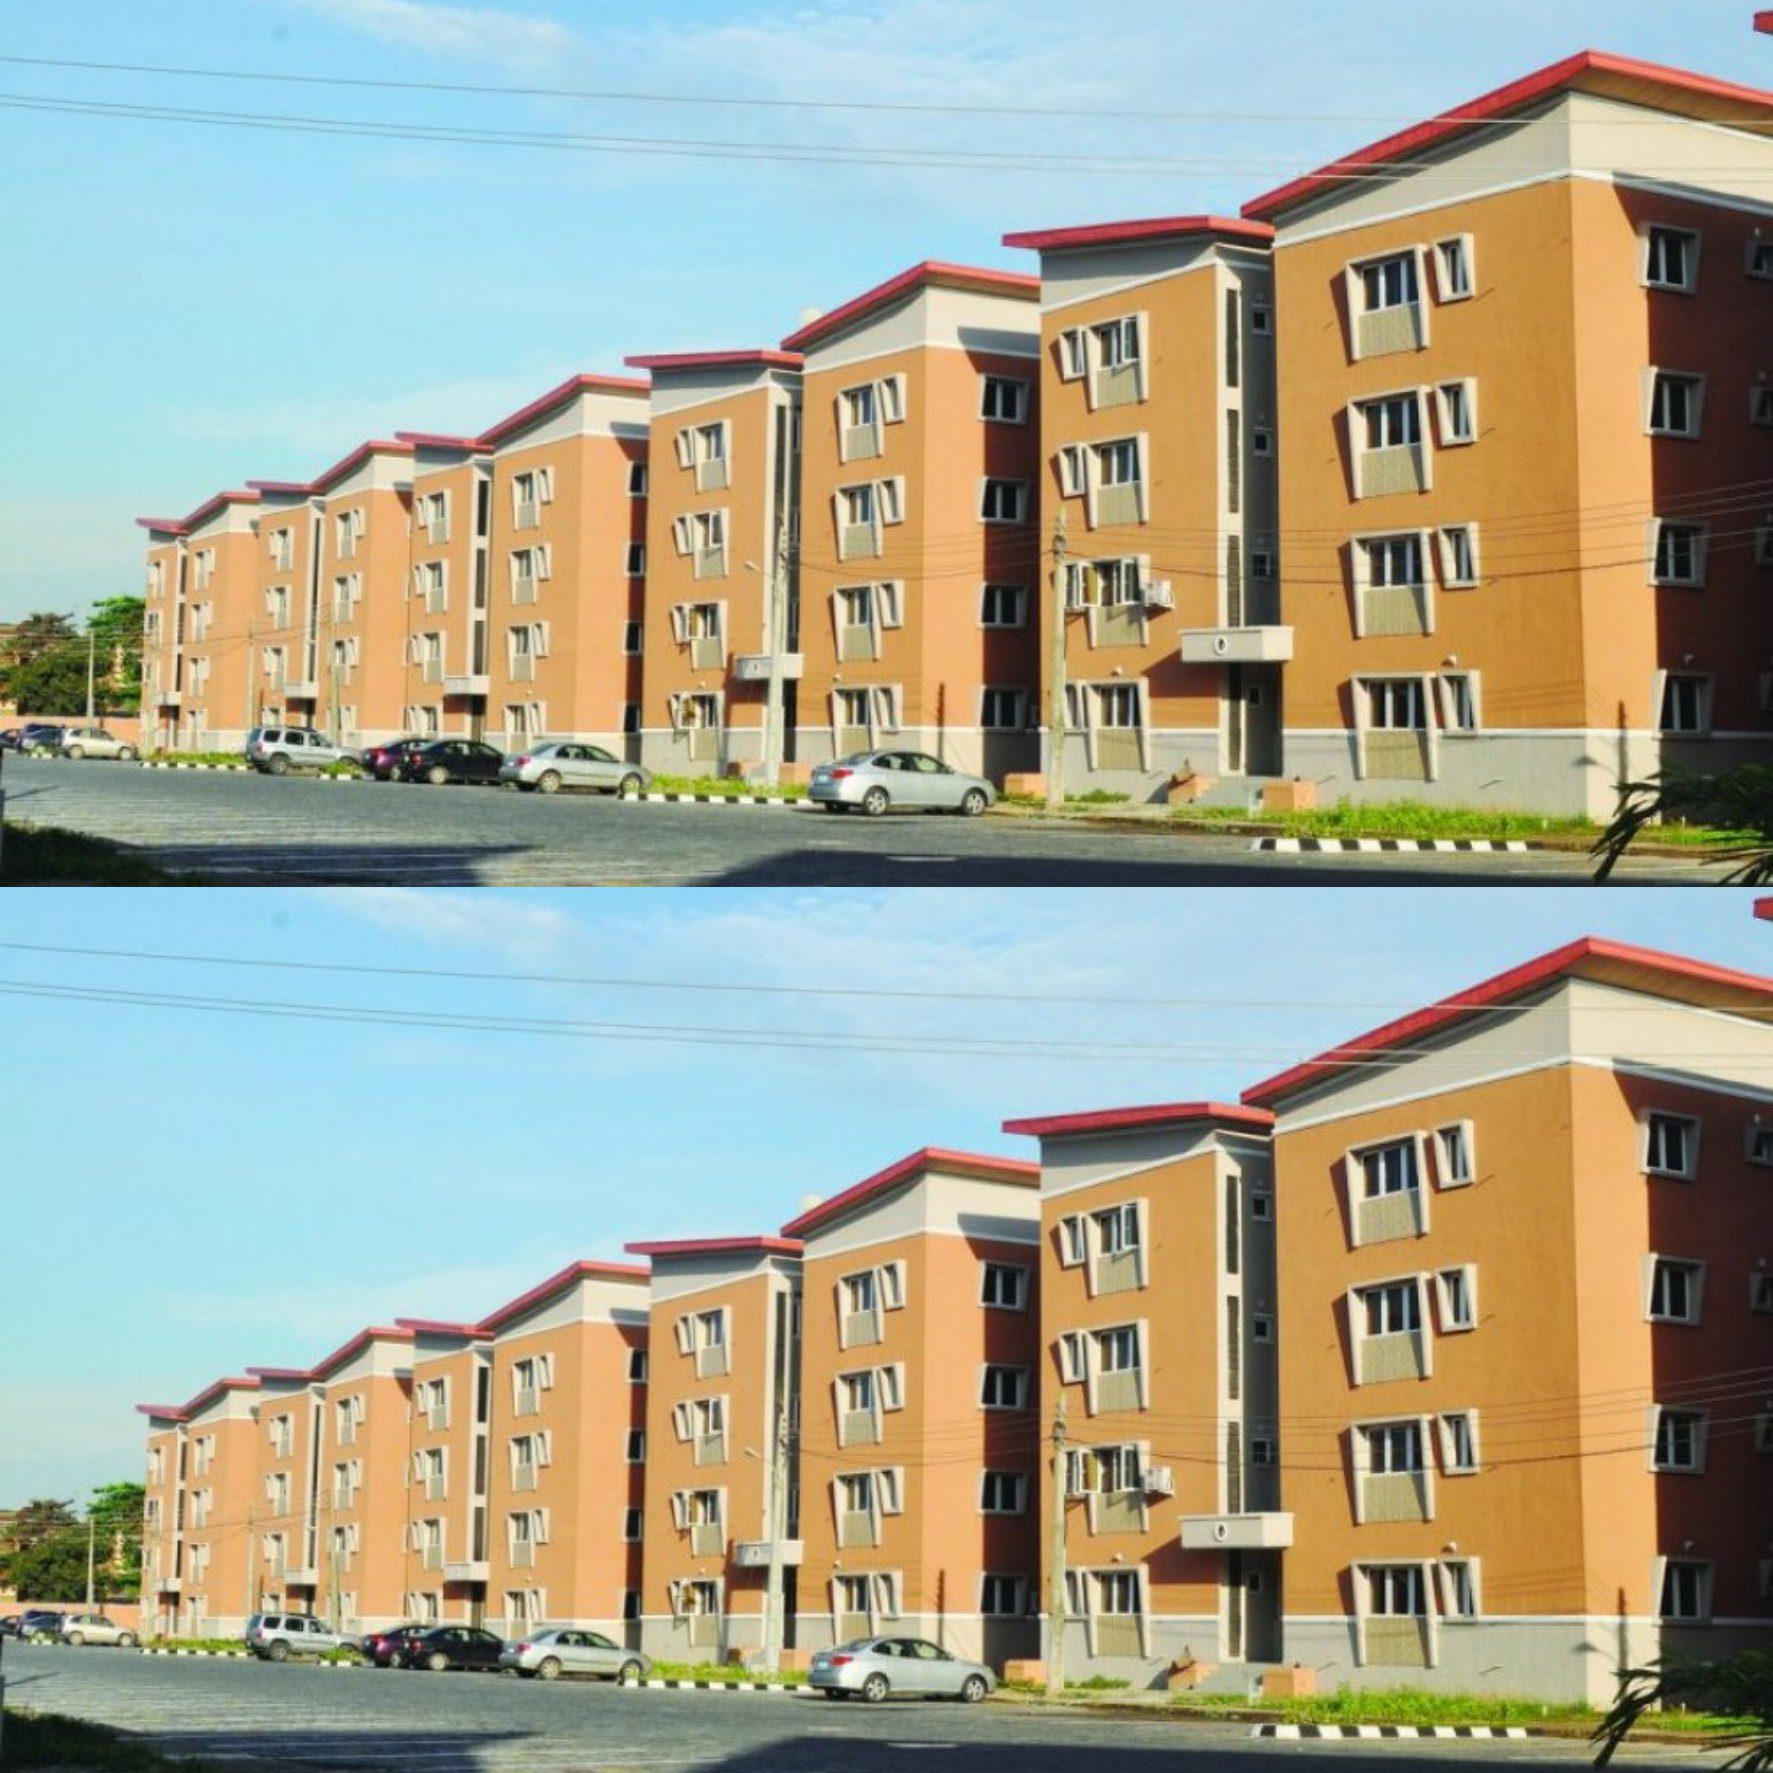 Nigeria: N200bn facility for social housing ready for disbursement —Presidency